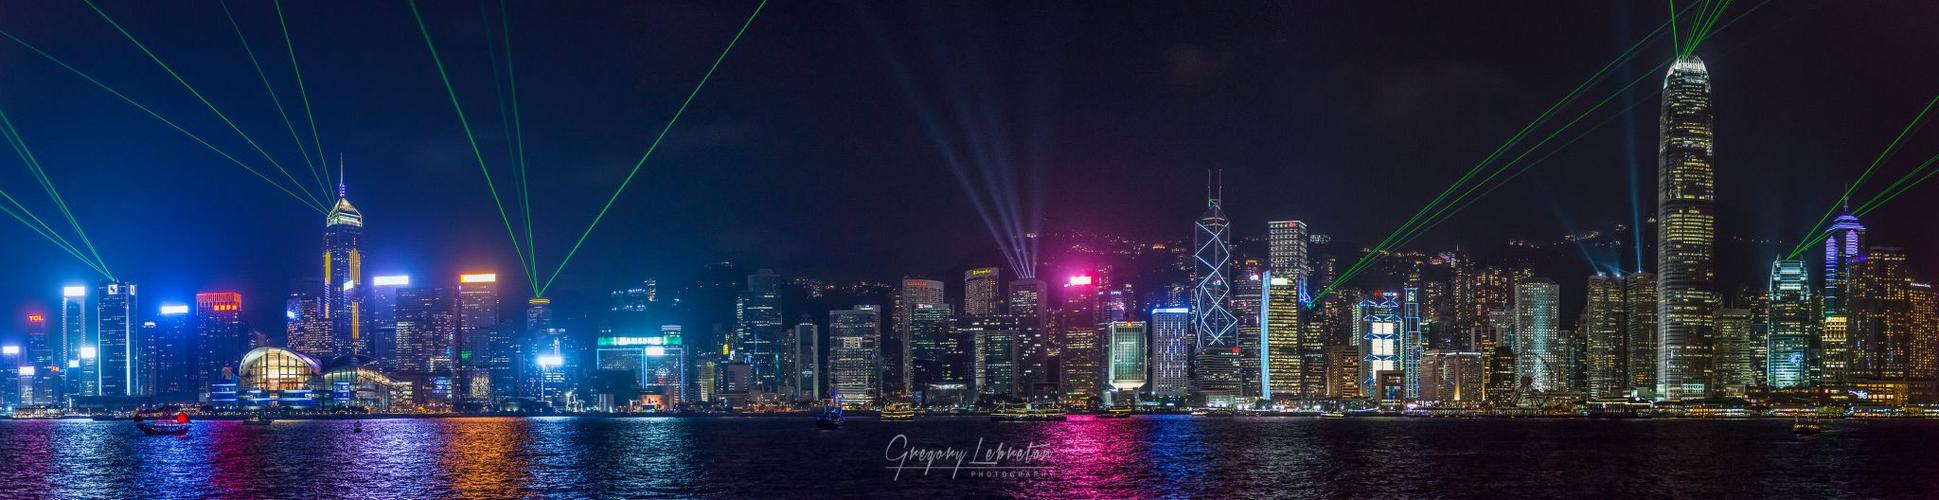 Hong Kong Waterfront & Skyscrapers